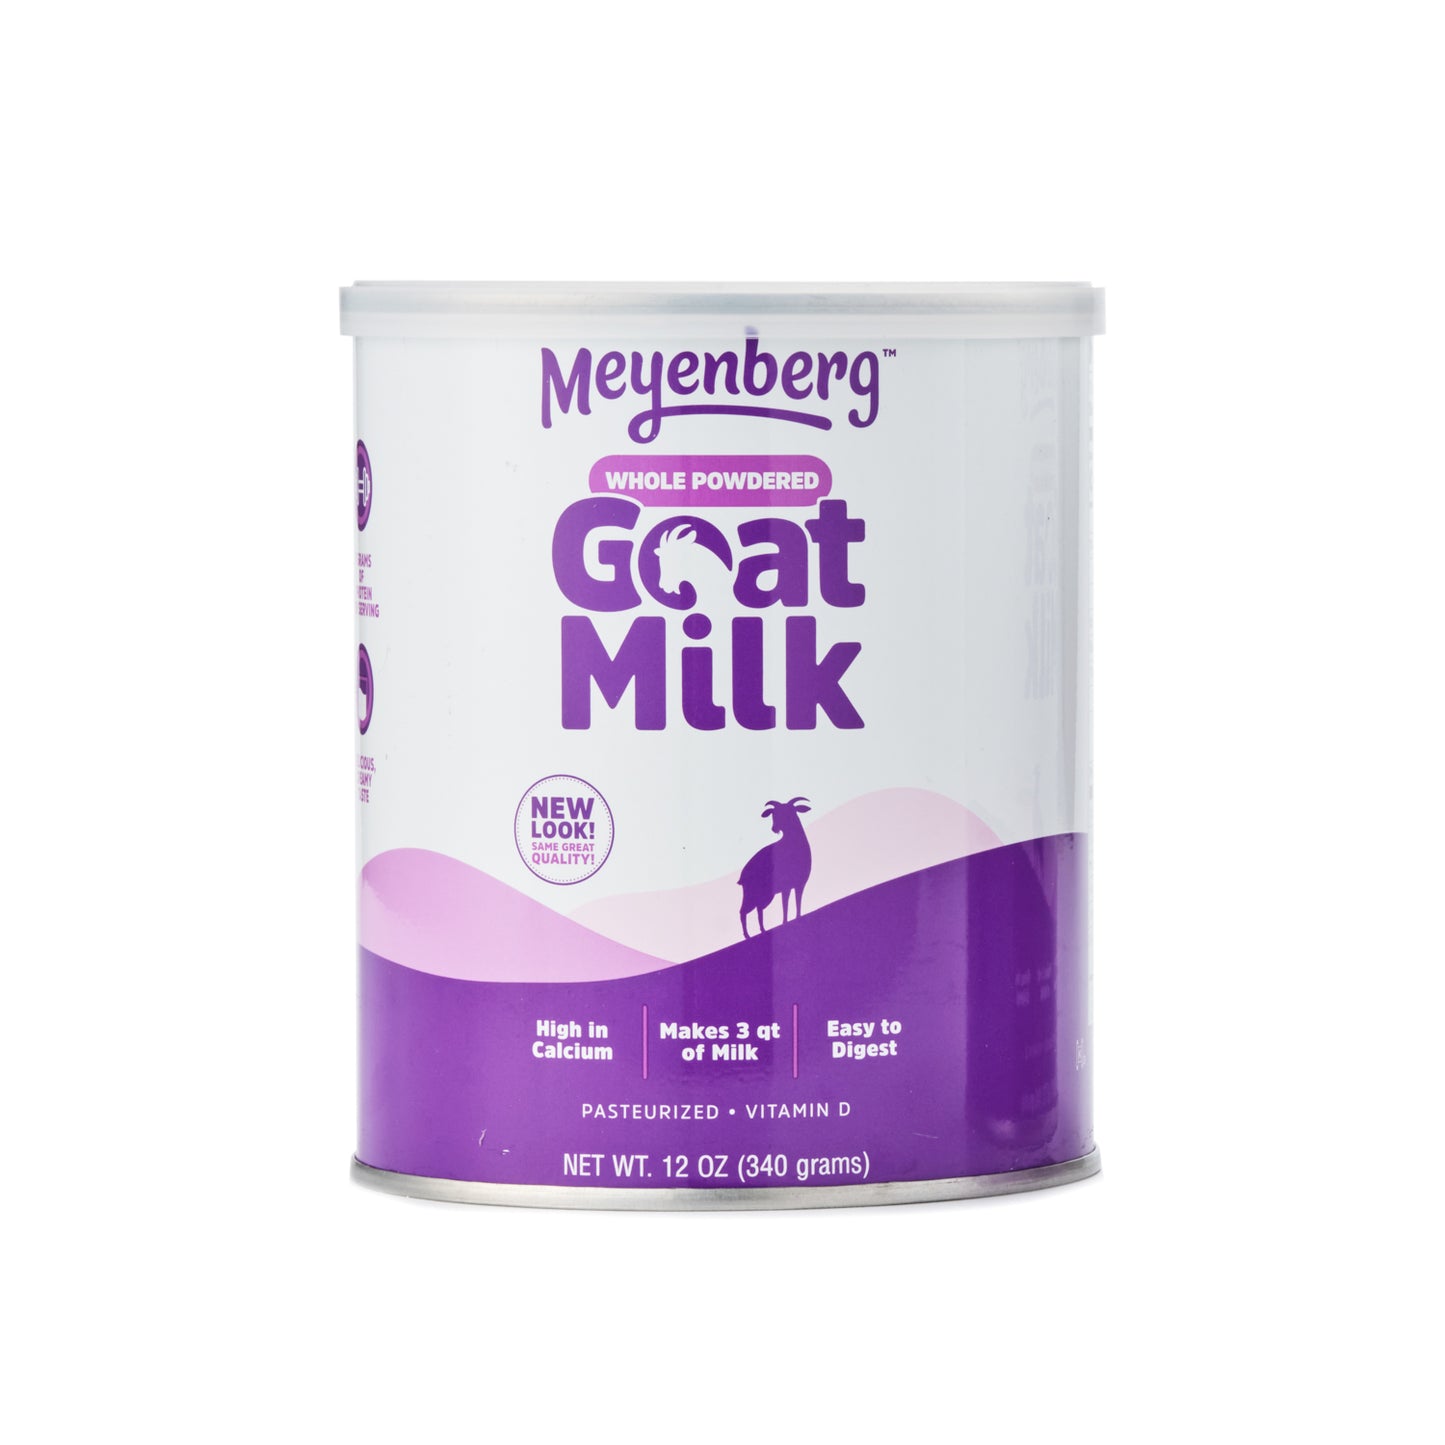 Meyenberg Goat Milk Powder with Vitamin D 340g